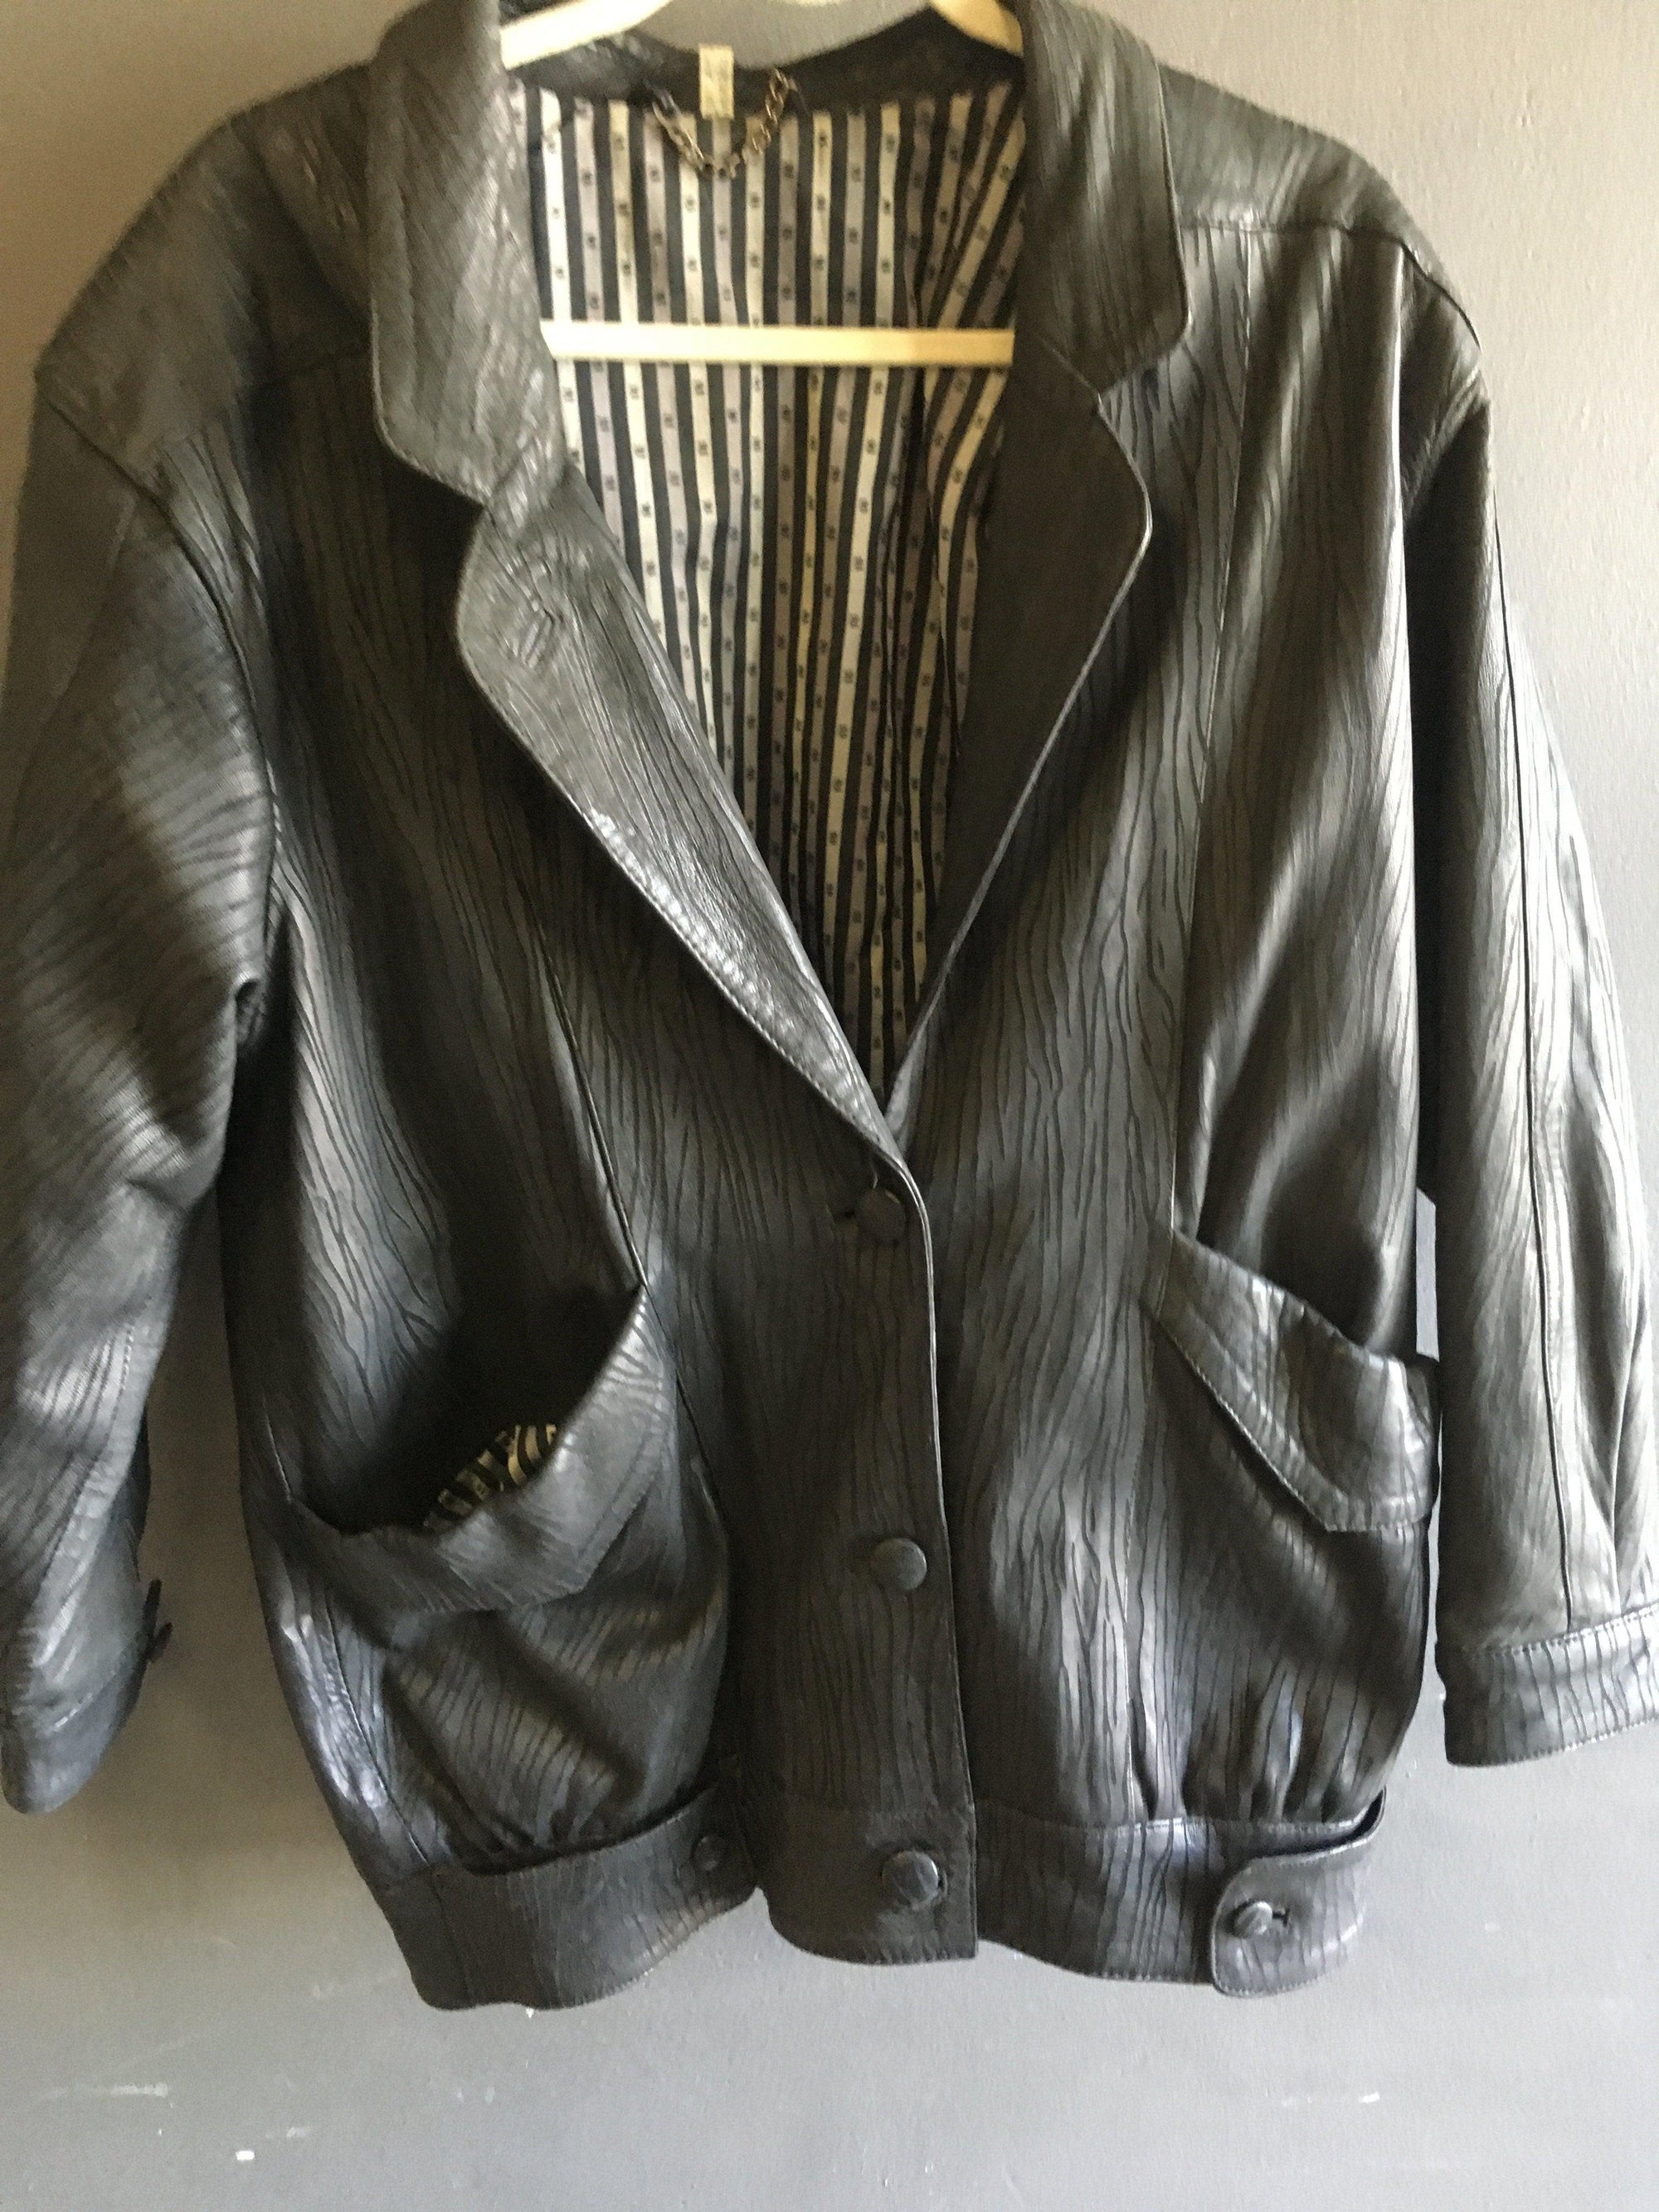 Vintage Leather Jacket with Pockets - 12 - 2ndhandwarehouse.com